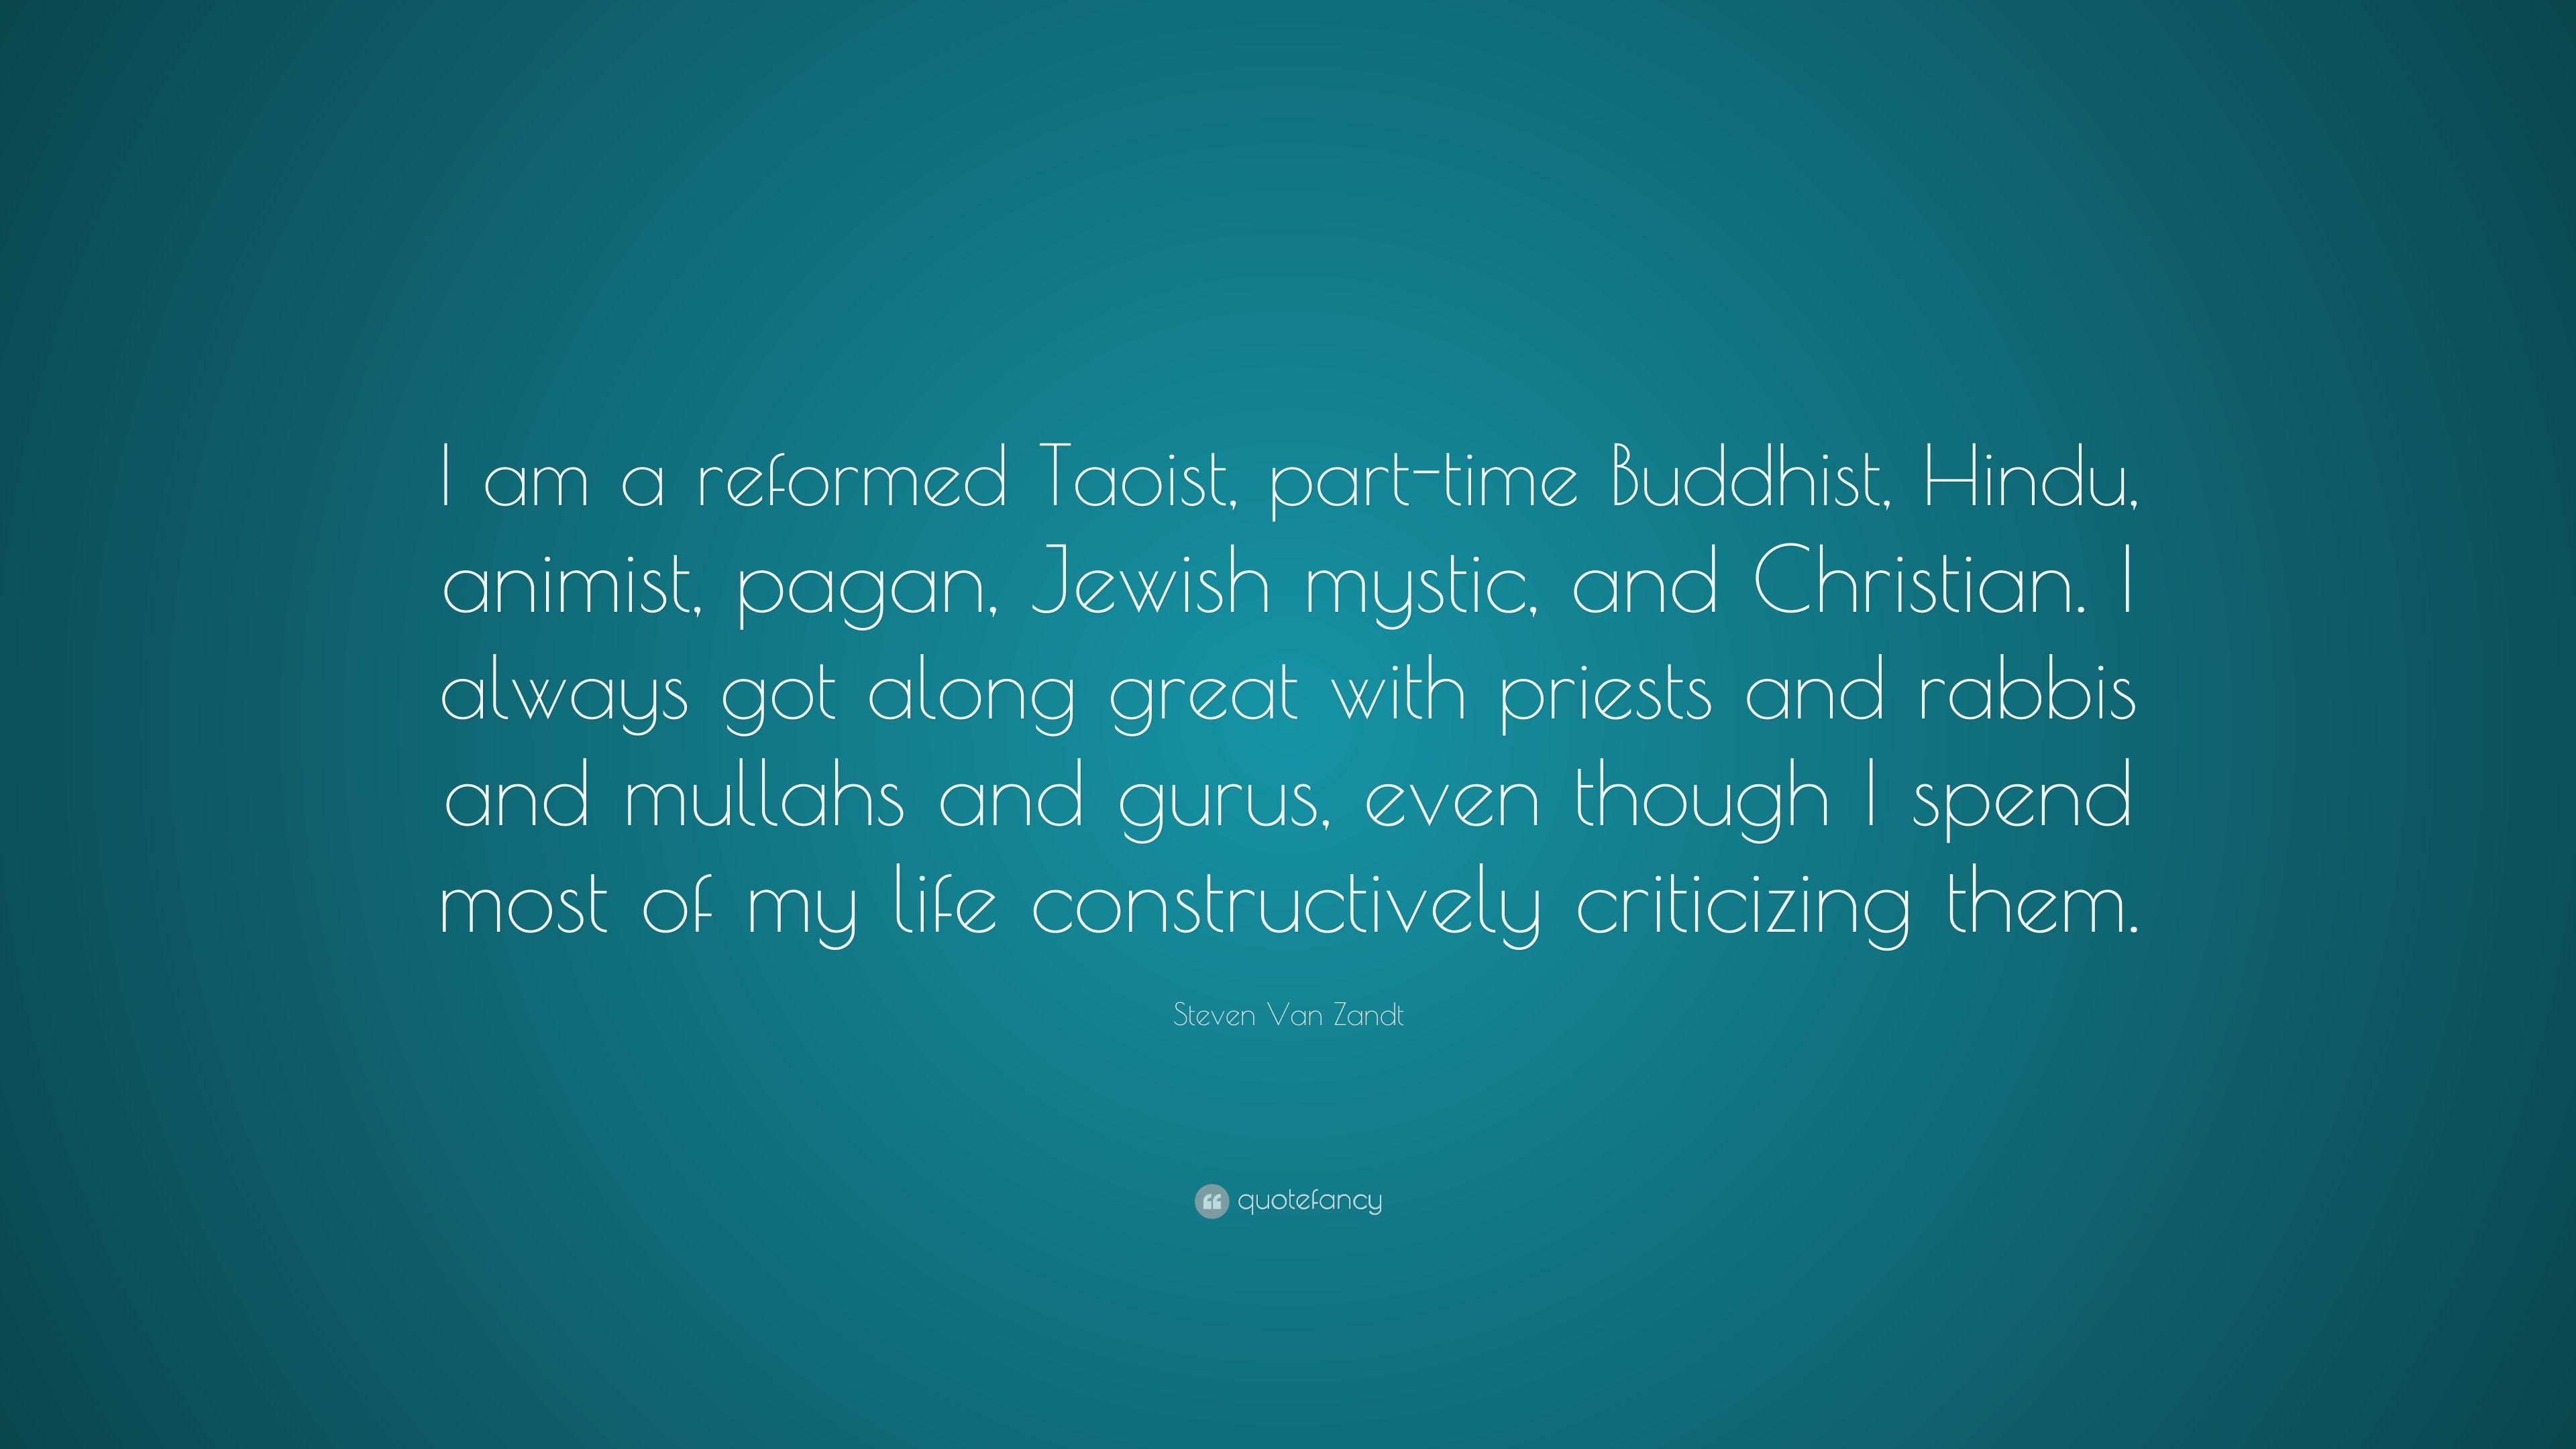 Steven Van Zandt Quote: “I Am A Reformed Taoist, Part Time Buddhist